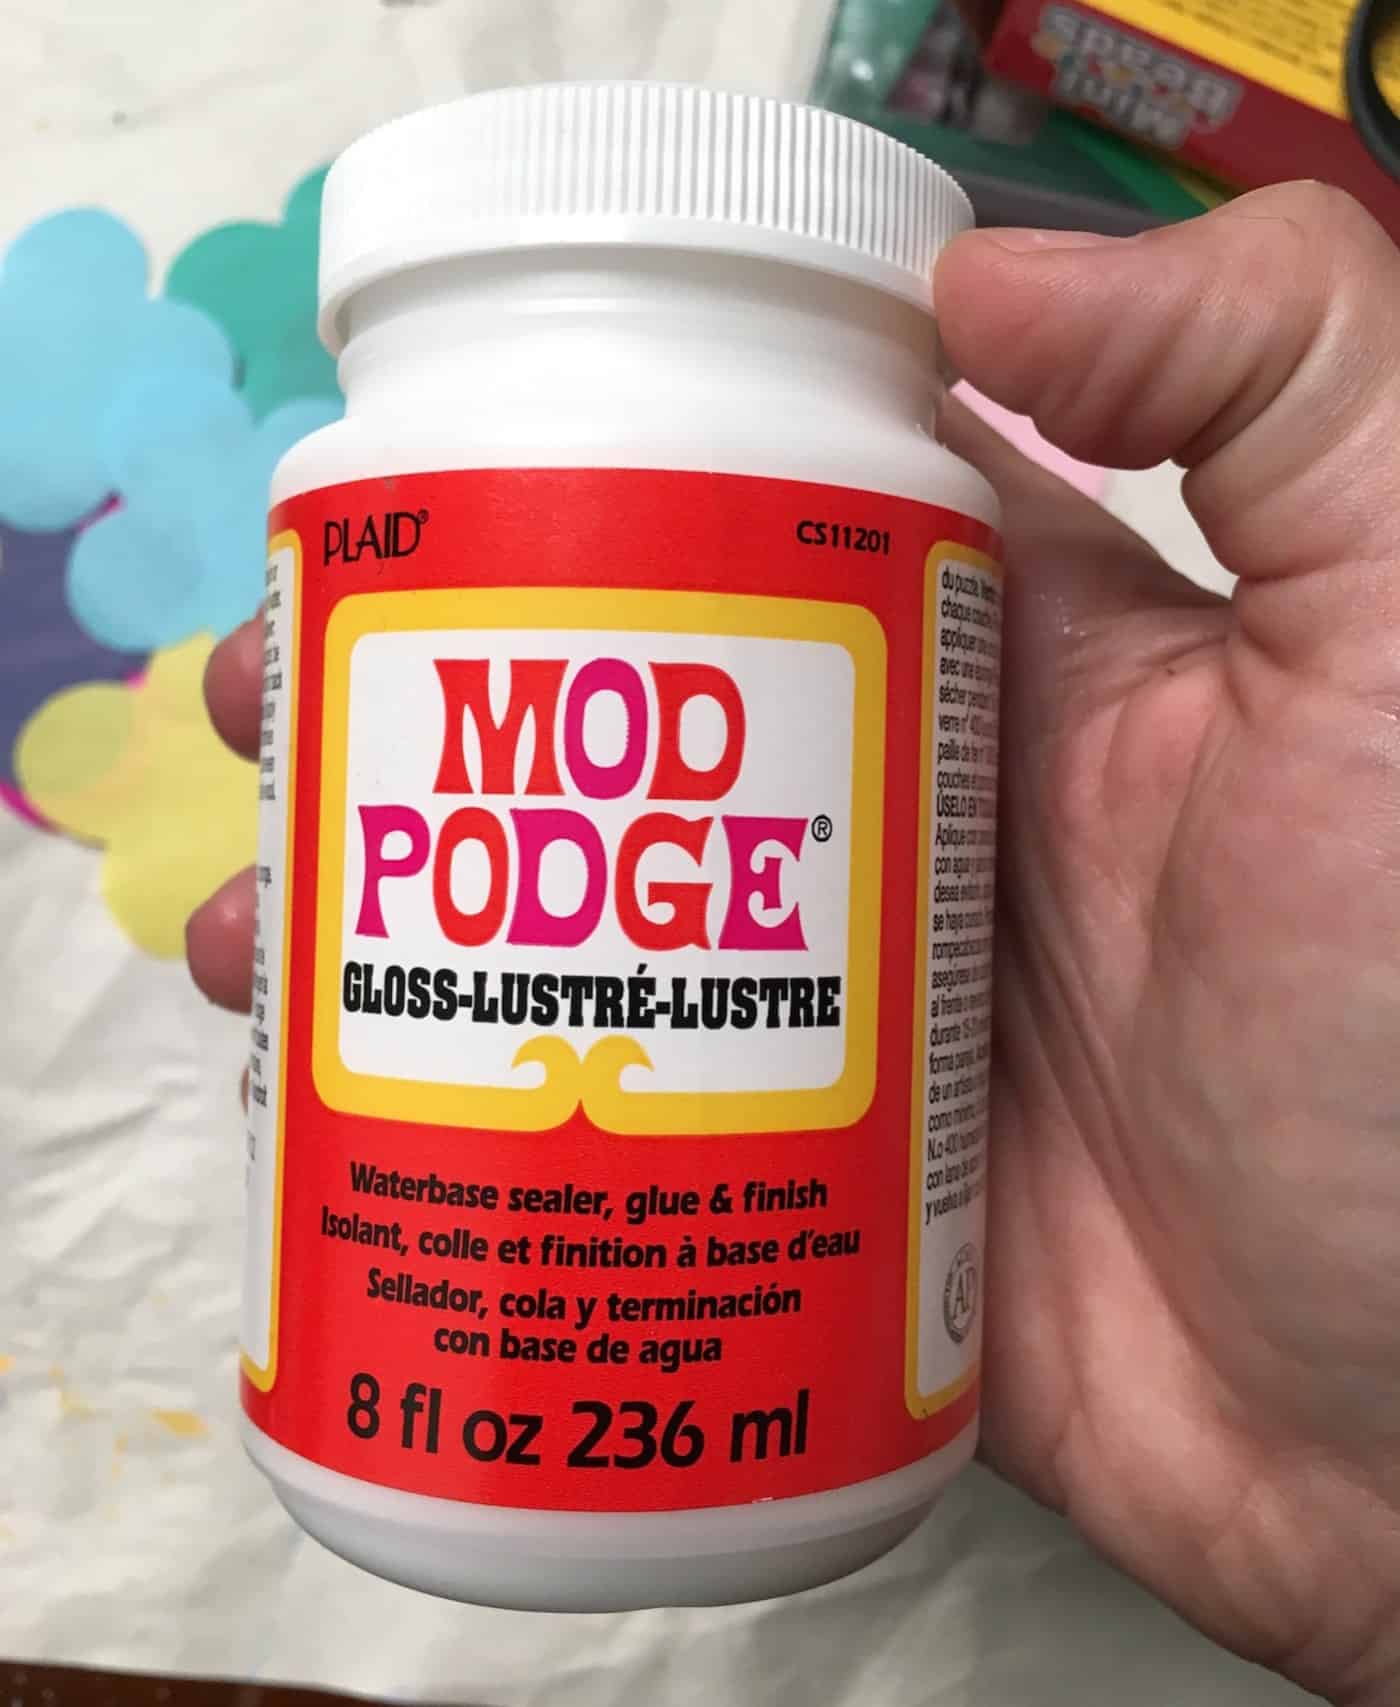 Hand holding a bottle of Mod Podge Gloss